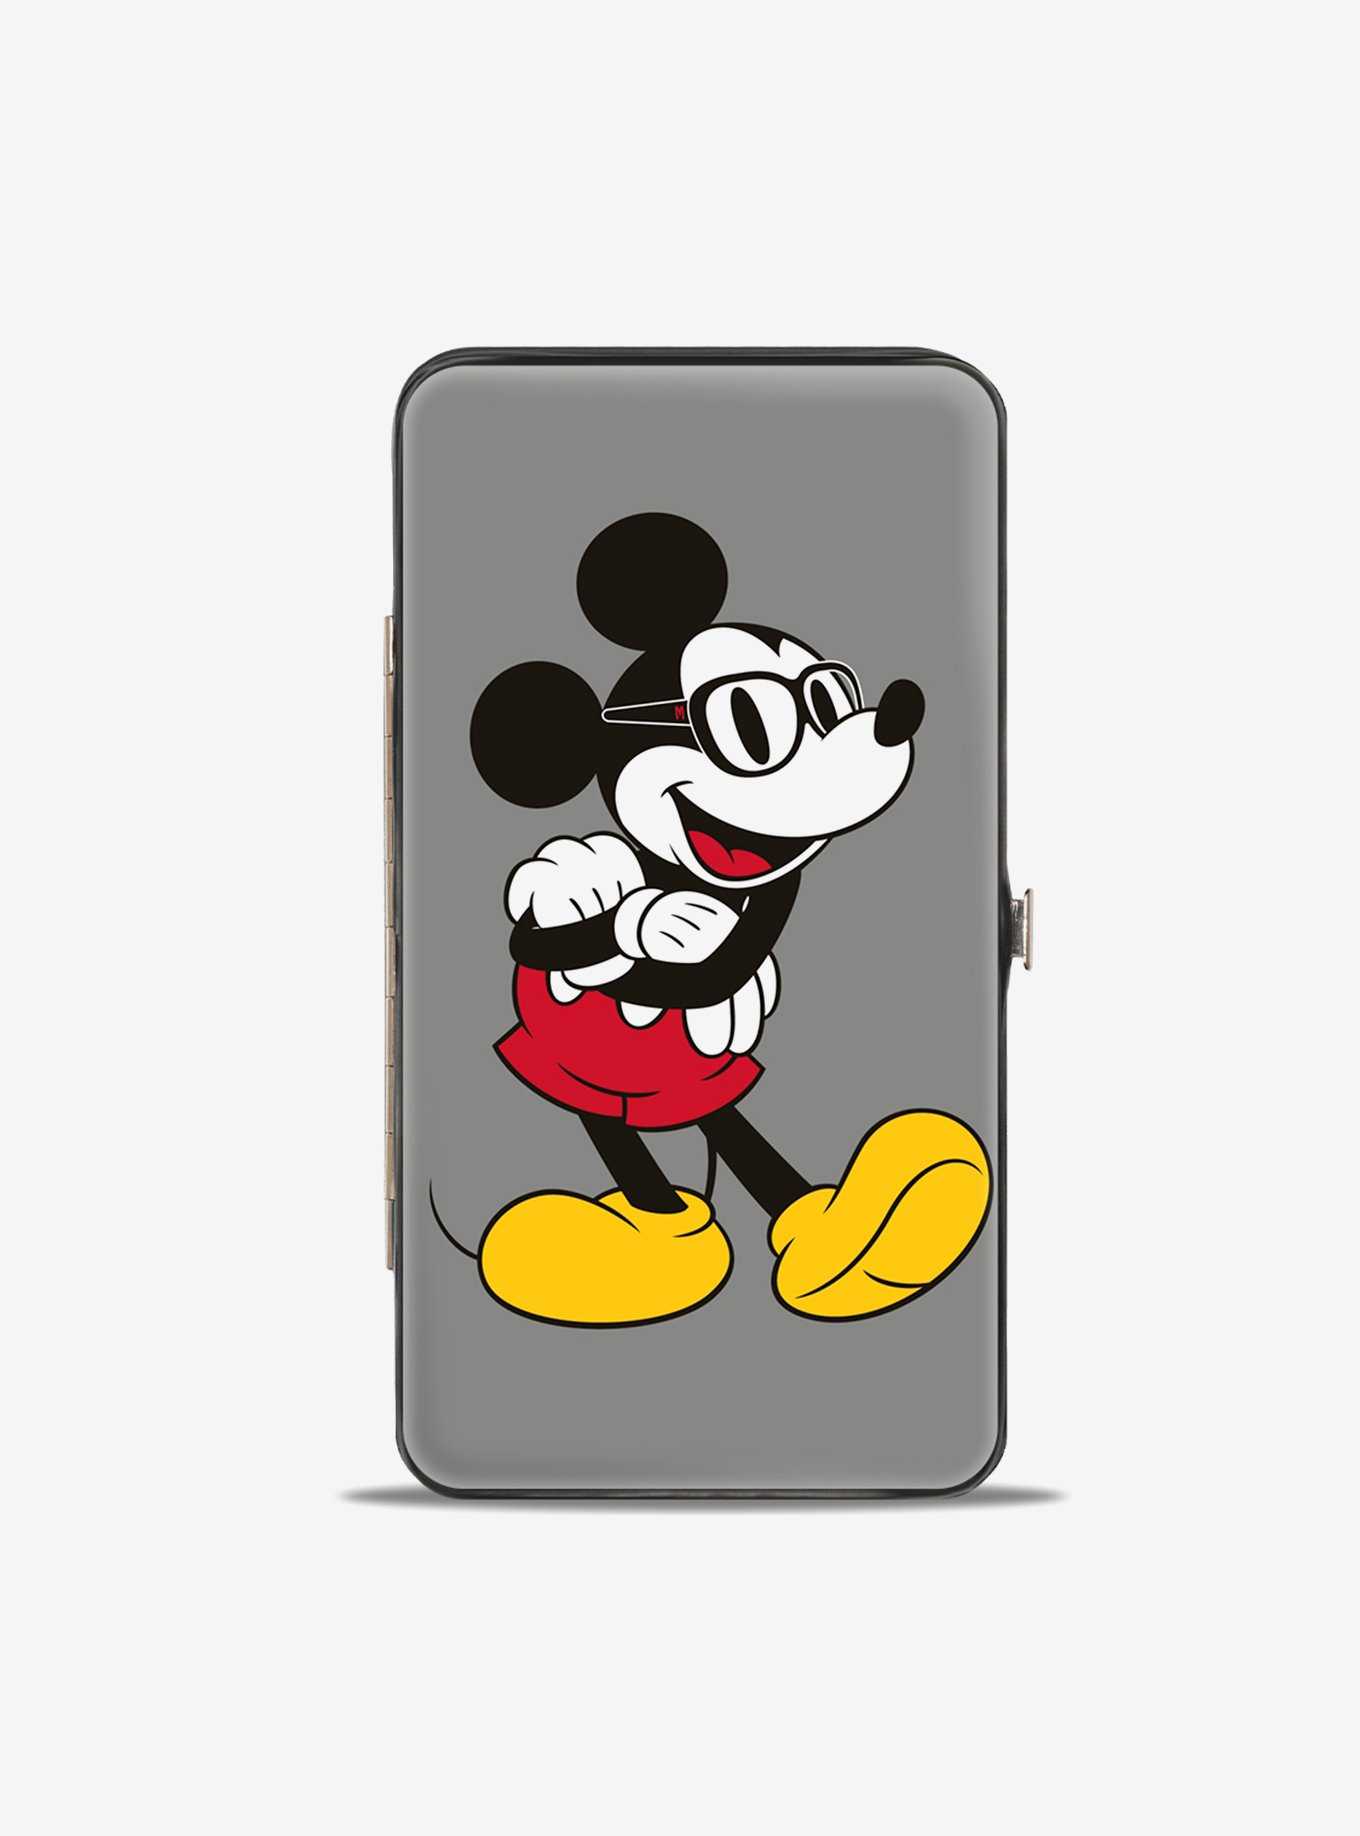 Disney Mickey Mouse Arms Crossed Walking Poses Hinged Wallet, , hi-res